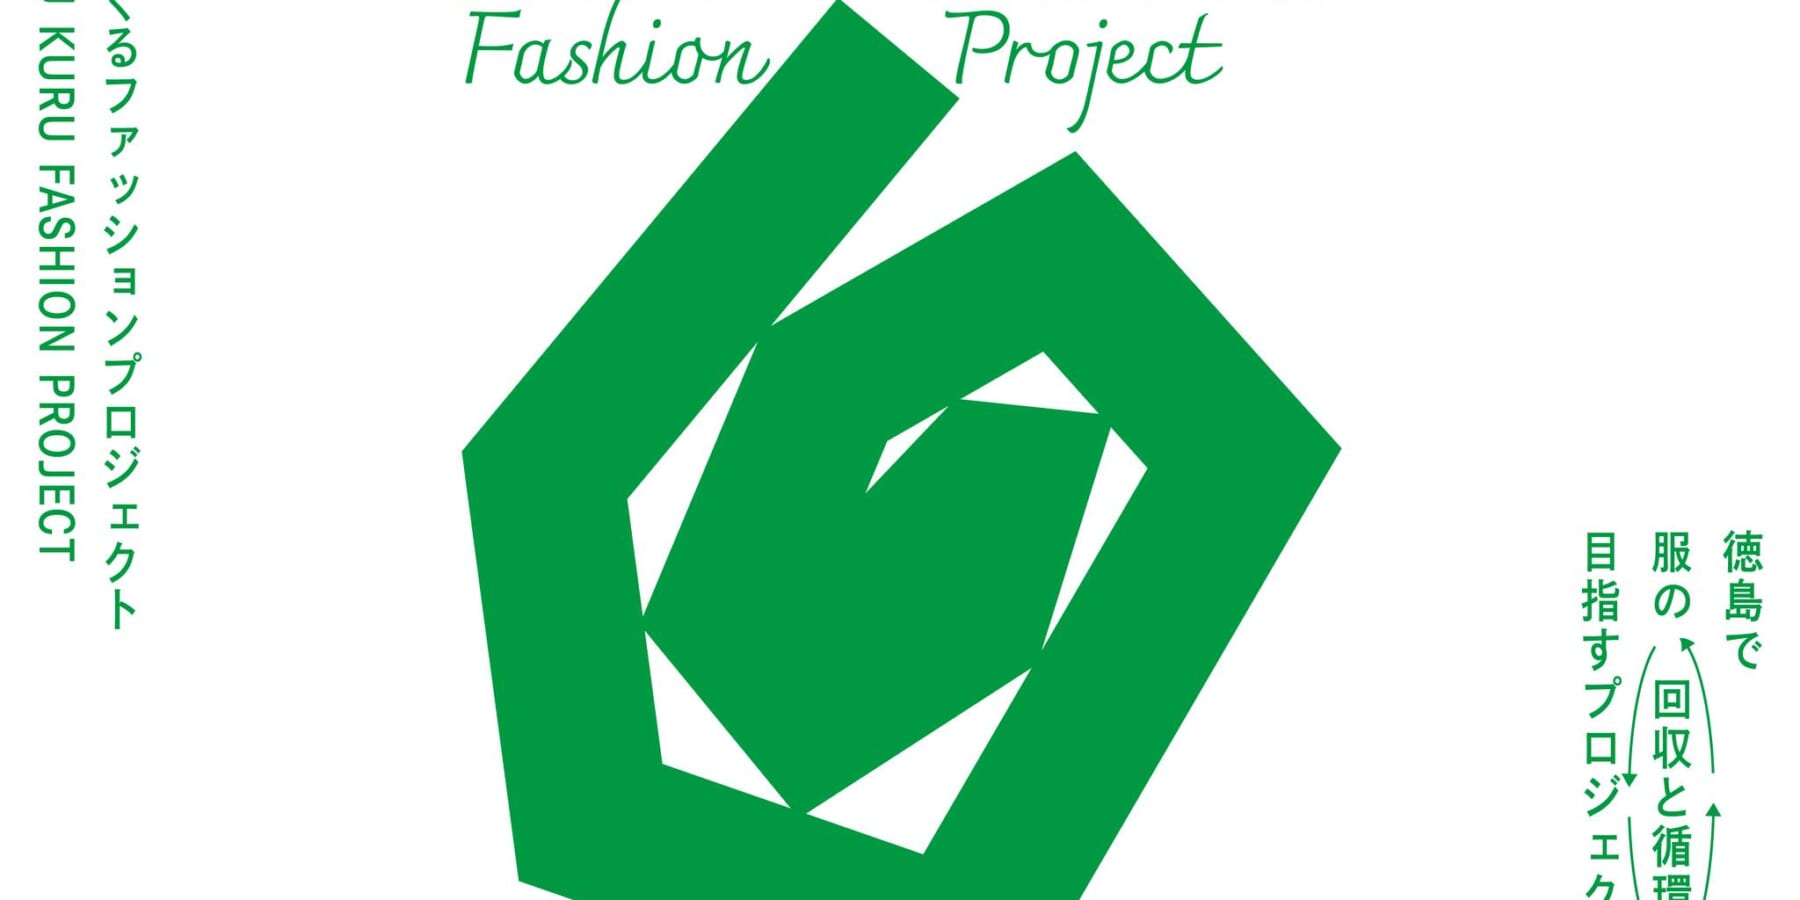 衣服循環スキーム「KURU KURU Fashion Project」